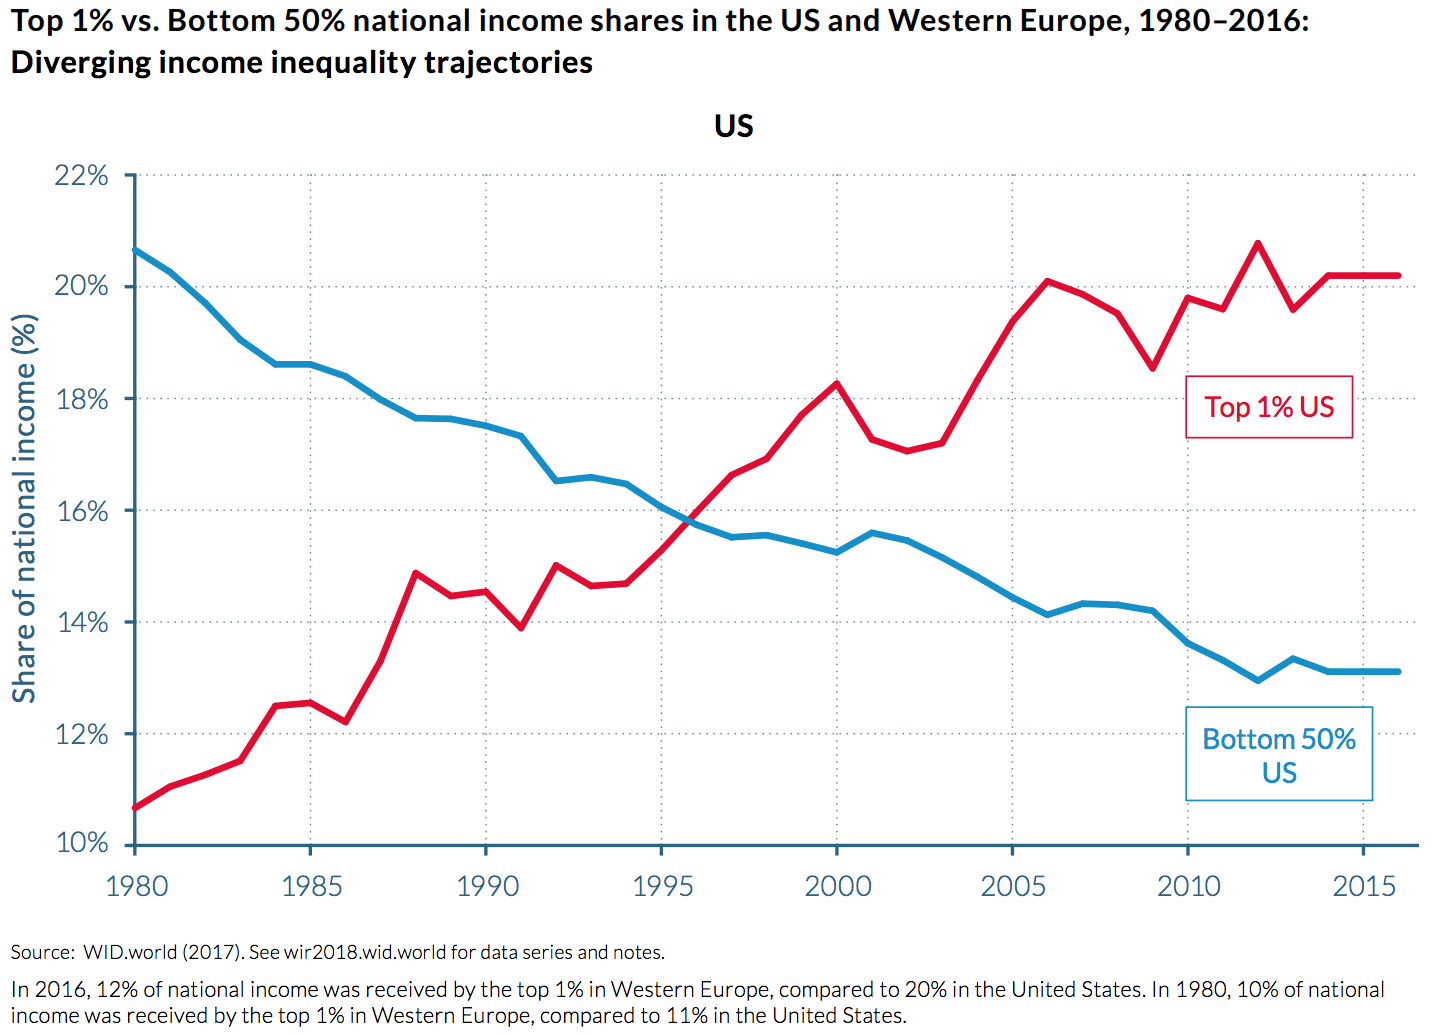 World - Inequality, WID 2017